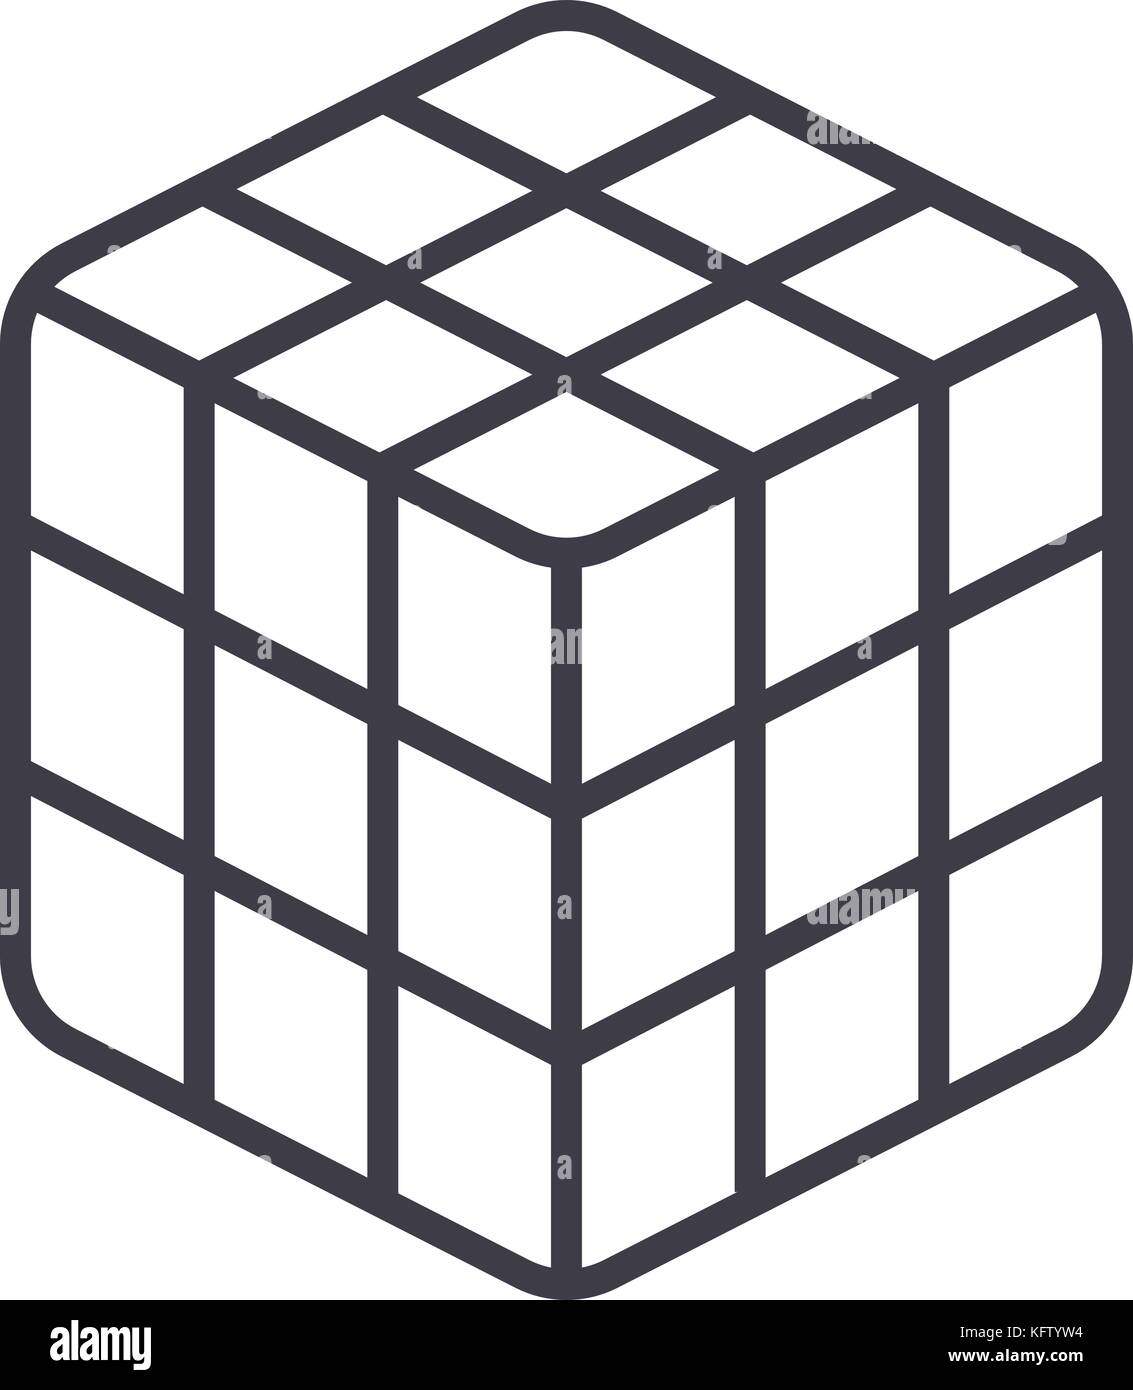 Силуэт кубик рубик для рисования 6 класс